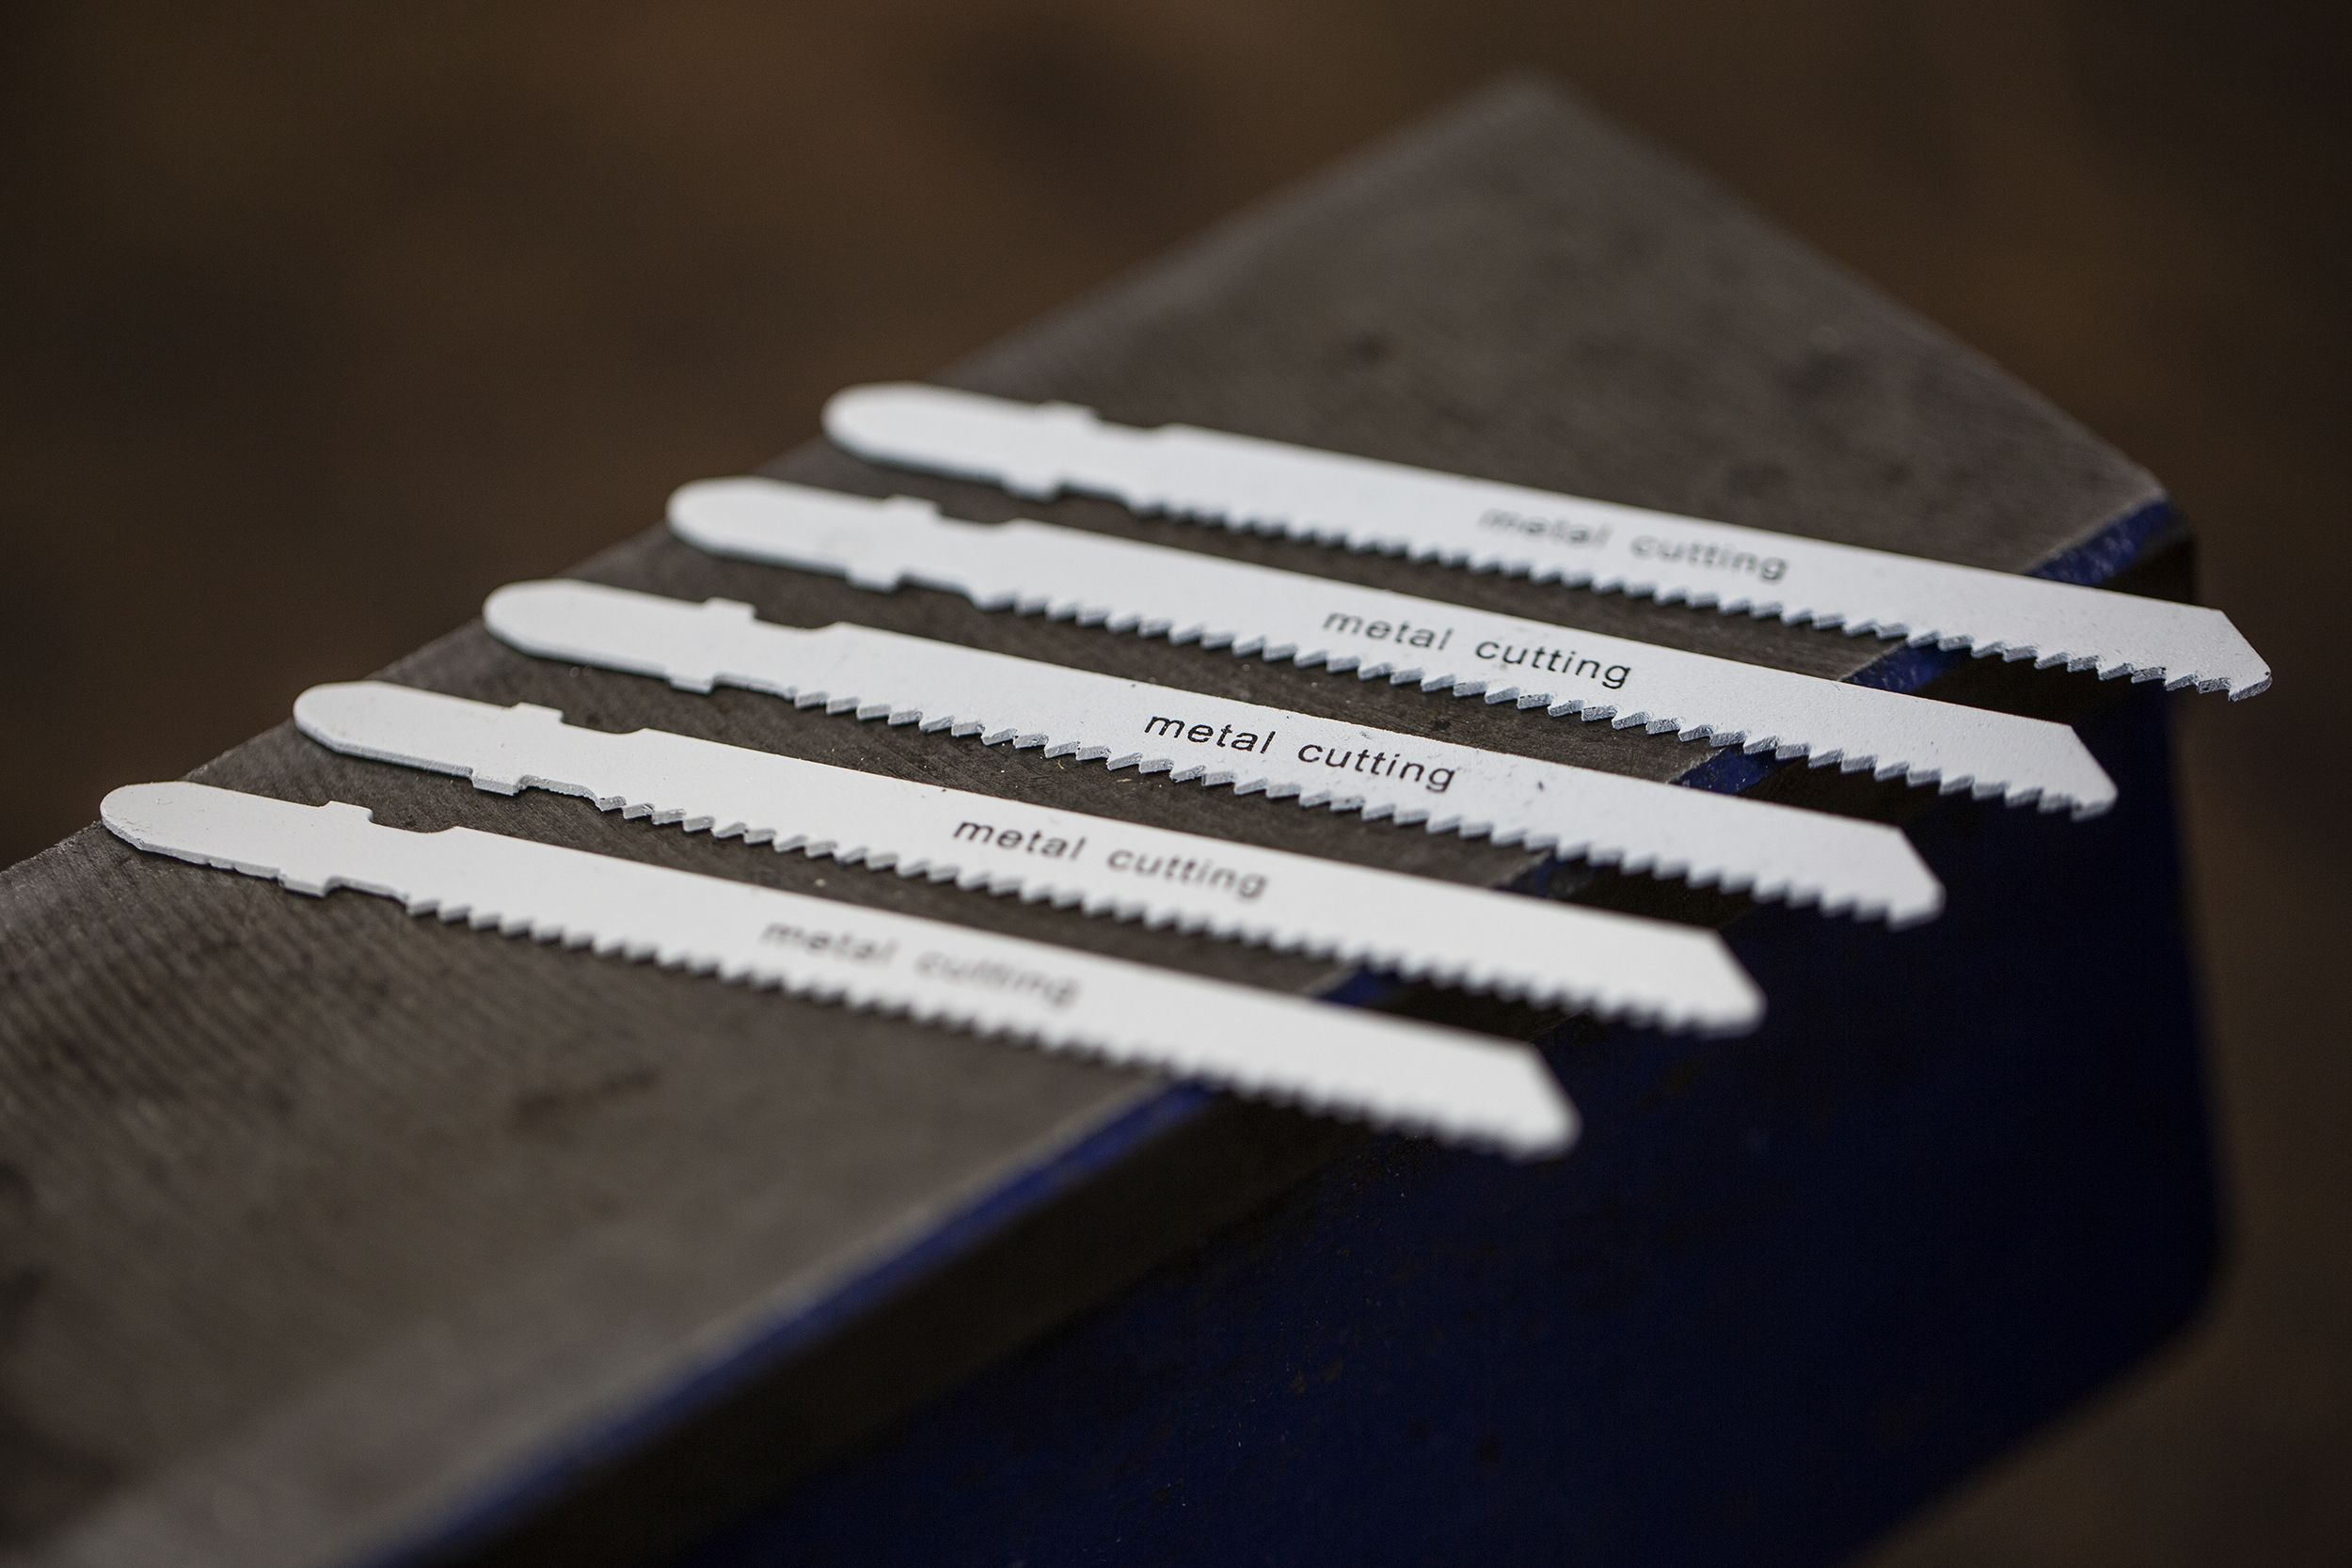 RS PRO, 12 Teeth Per Inch 75mm Cutting Length Jigsaw Blade, Pack of 5